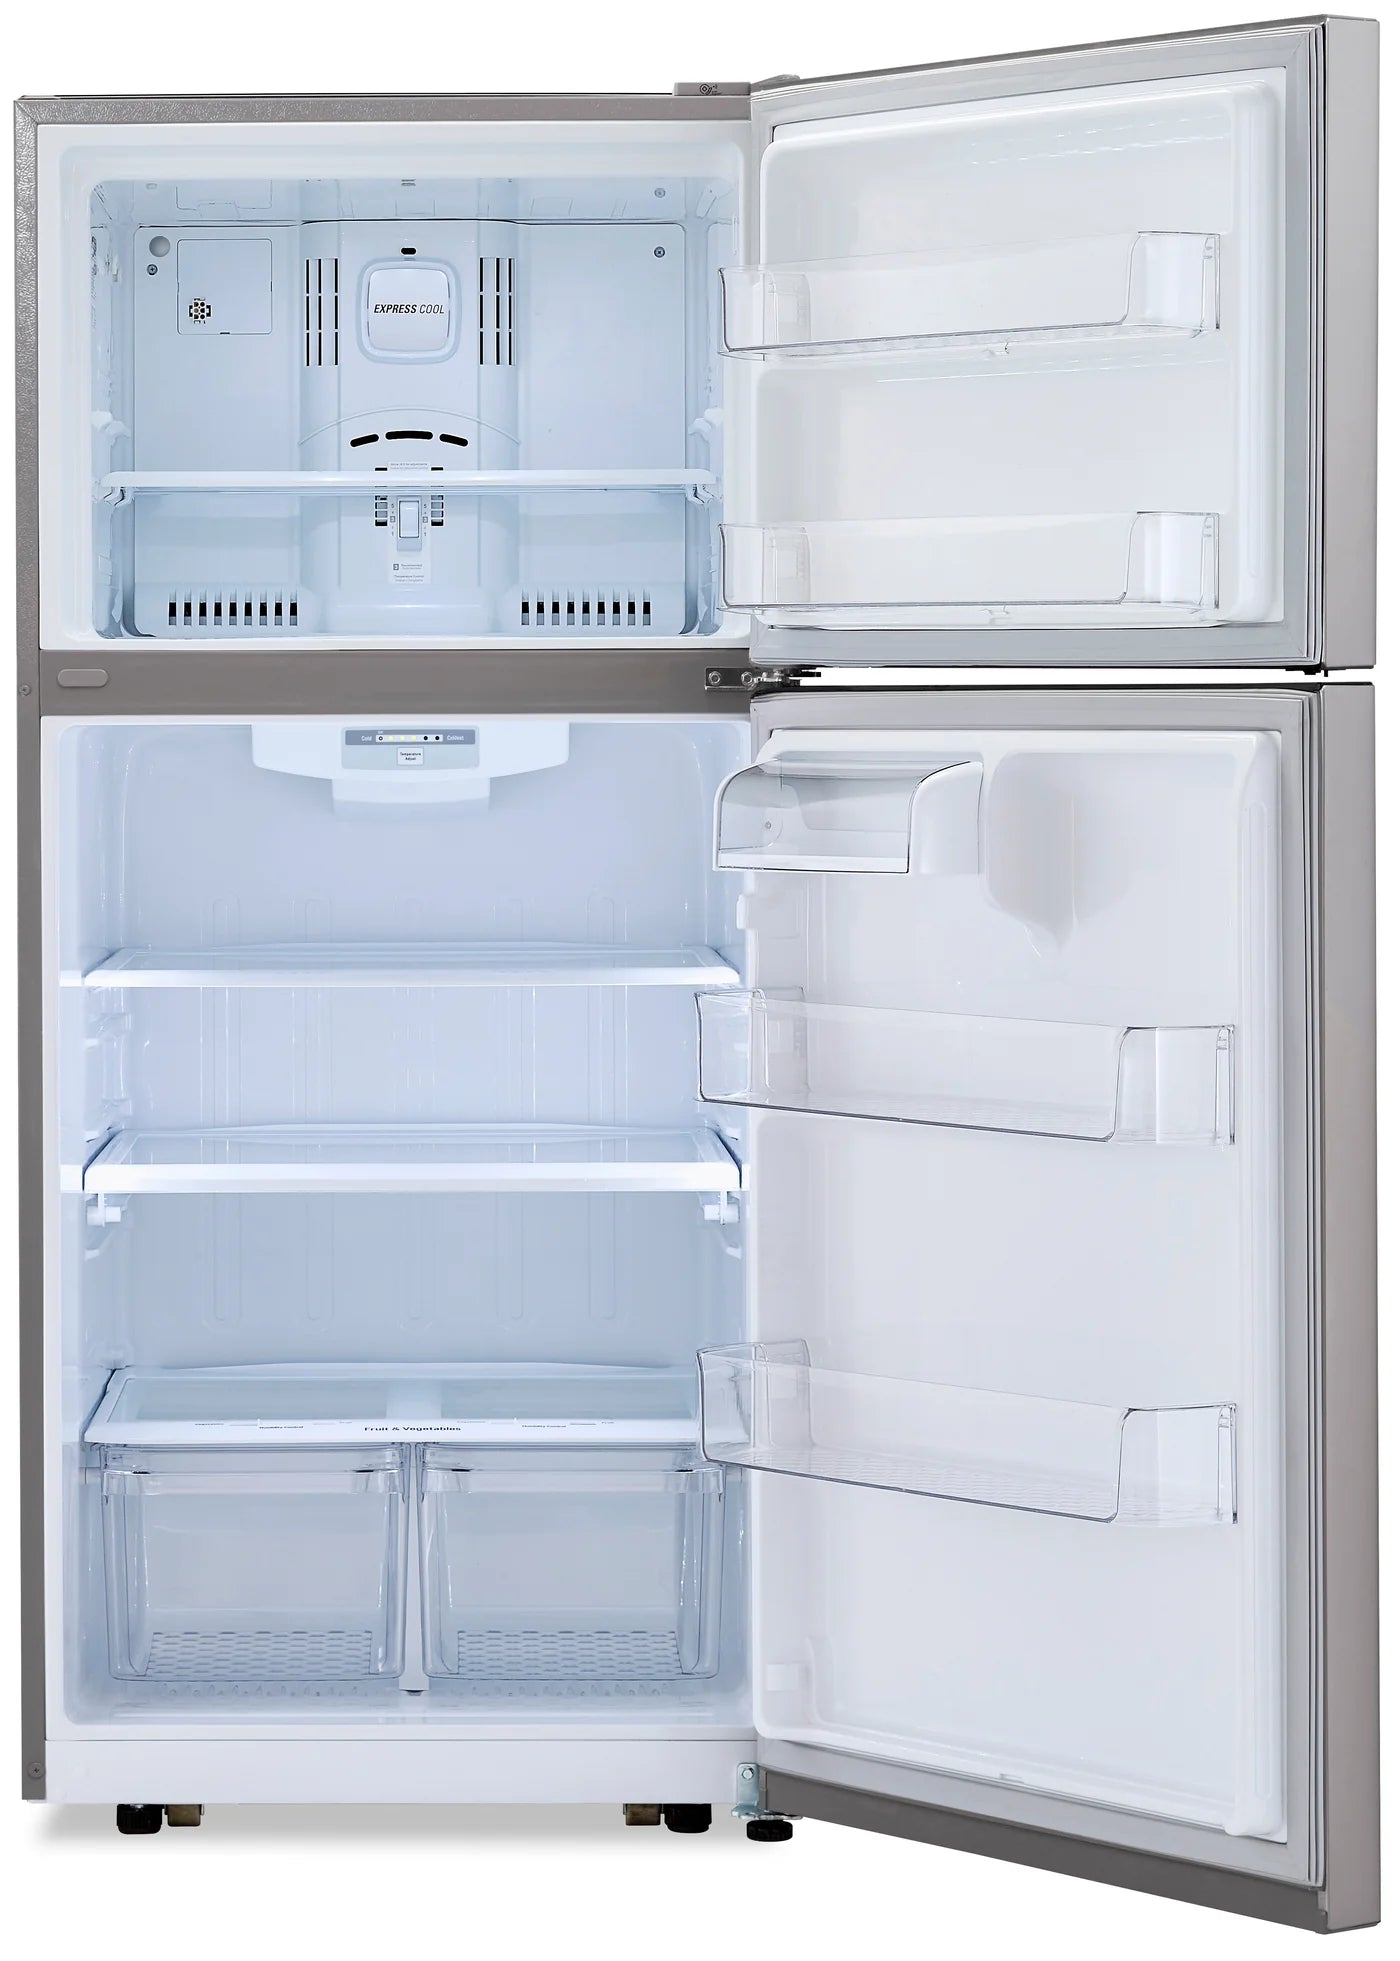 LG Refrigerator 30" Stainless Steel LTCS20020S